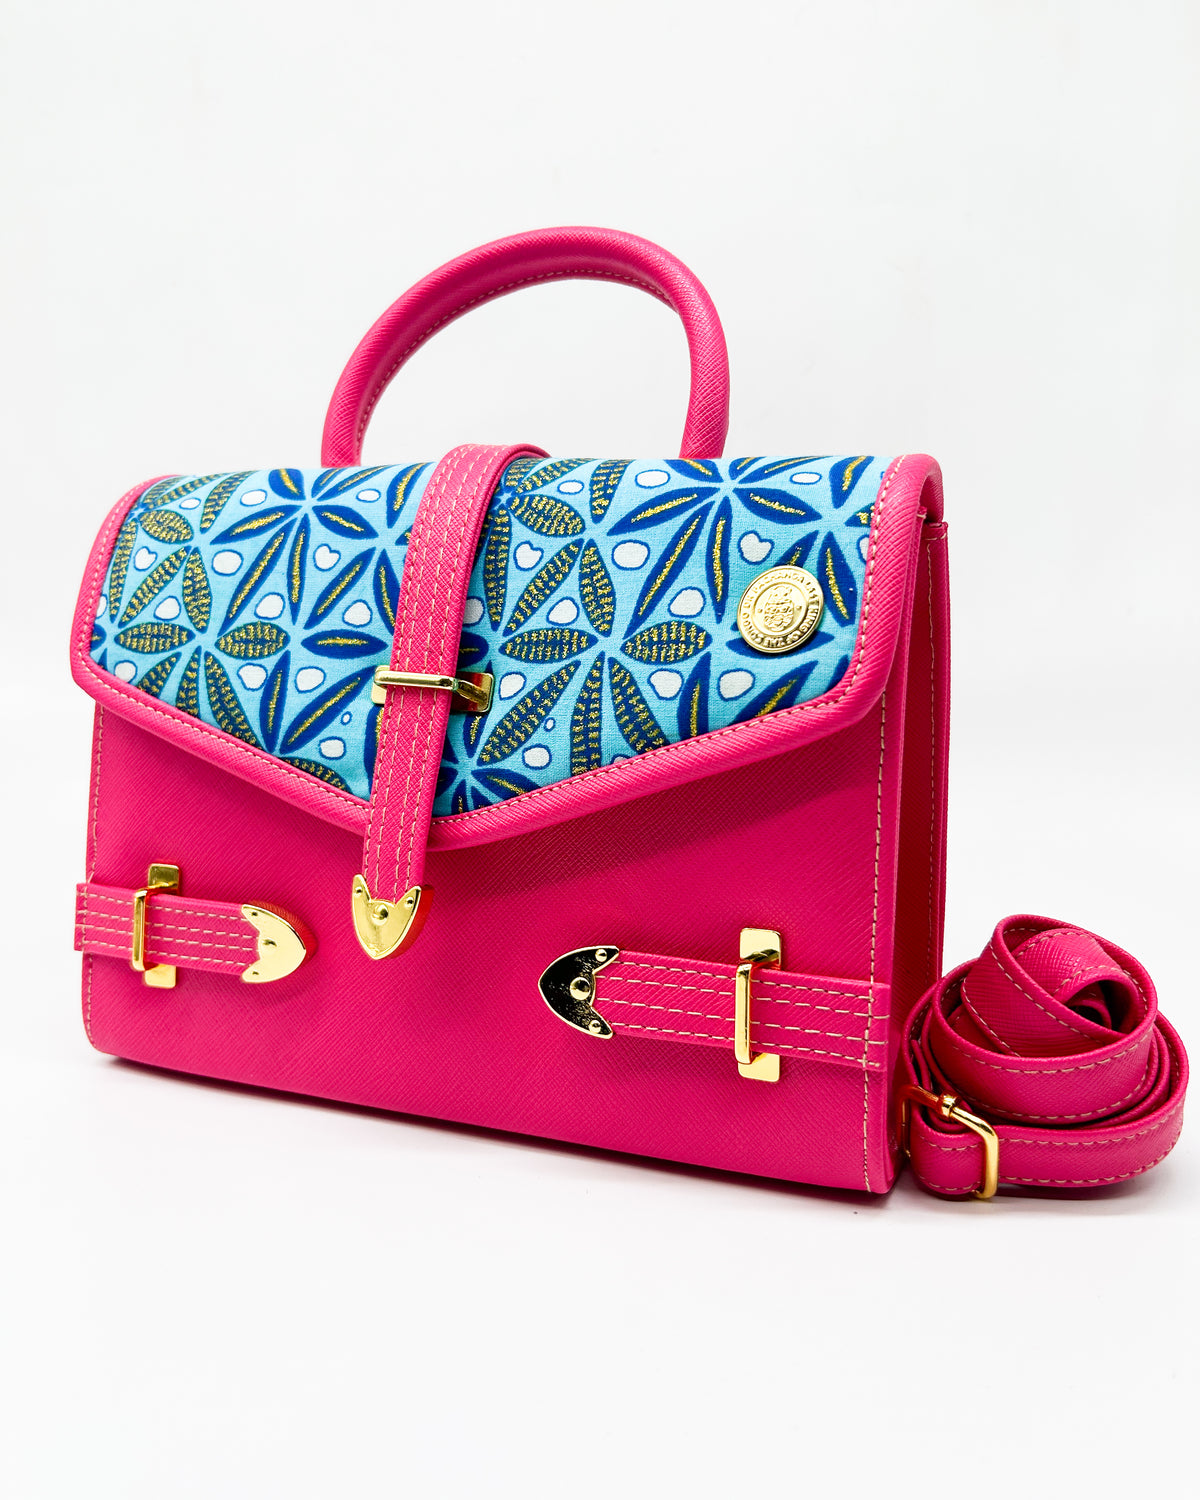 Dolongo Pink & Turquoise Print